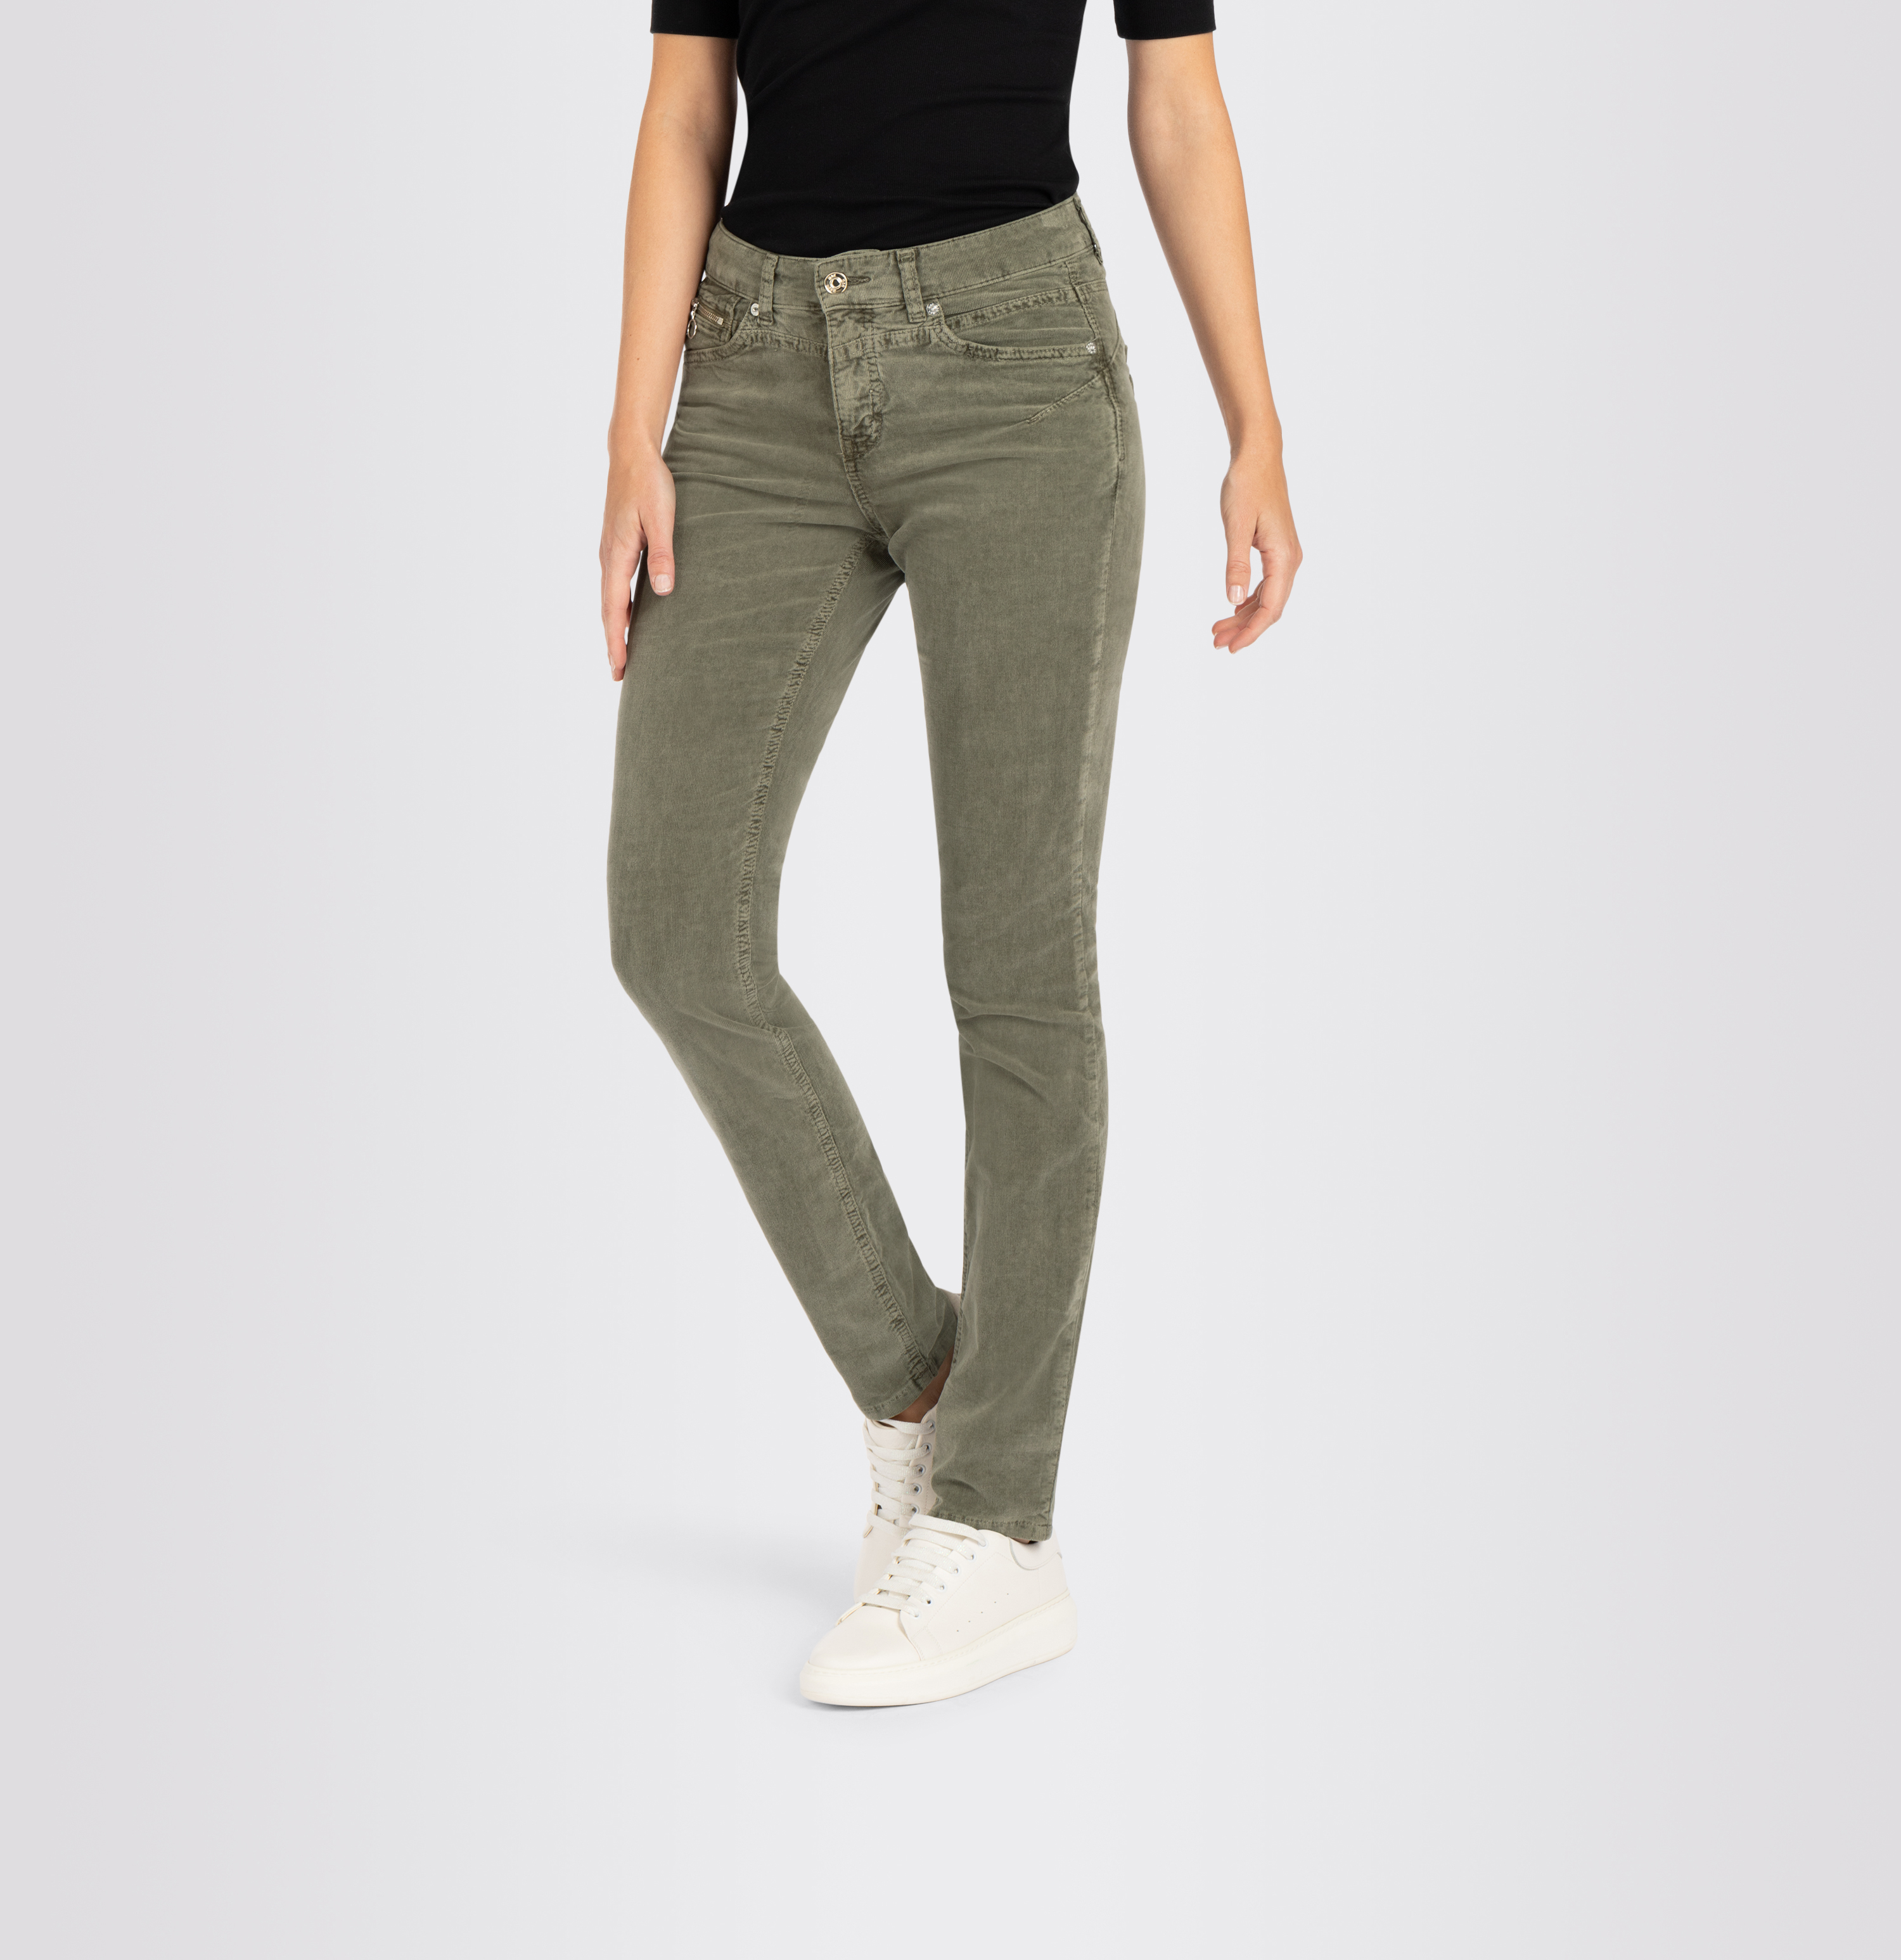 Damenhose, Rich Slim, Shop grün Jeans Baby MAC Soft, 662R 